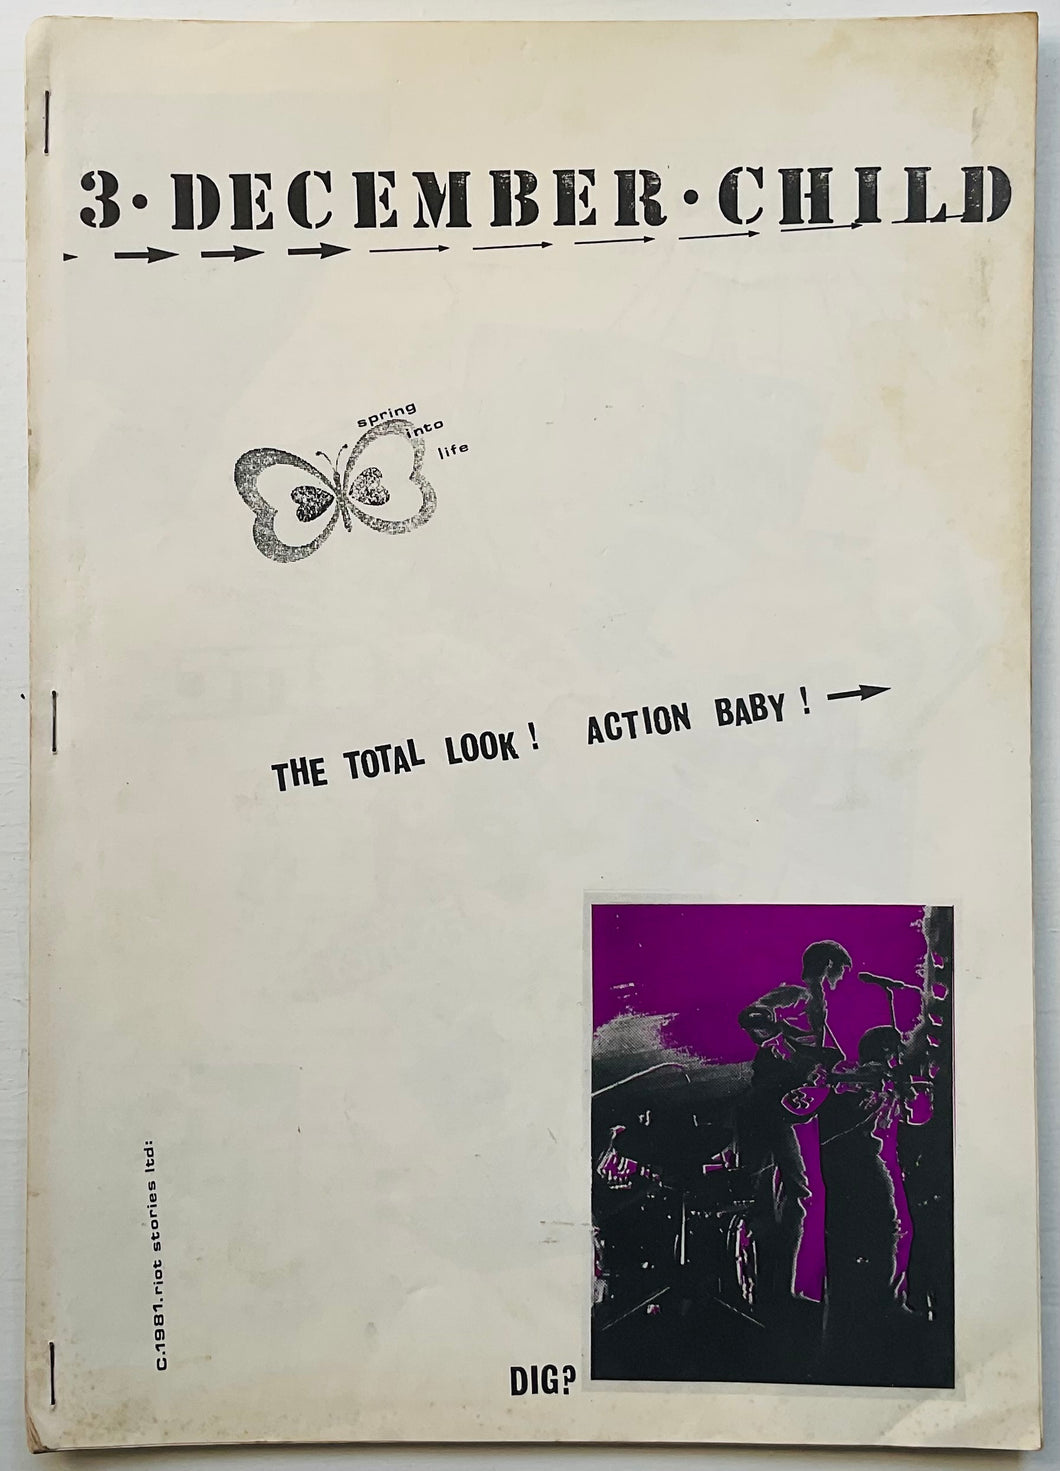 Jam Paul Weller December Child 3 Original Fanzine Mod Punk Magazine 1981